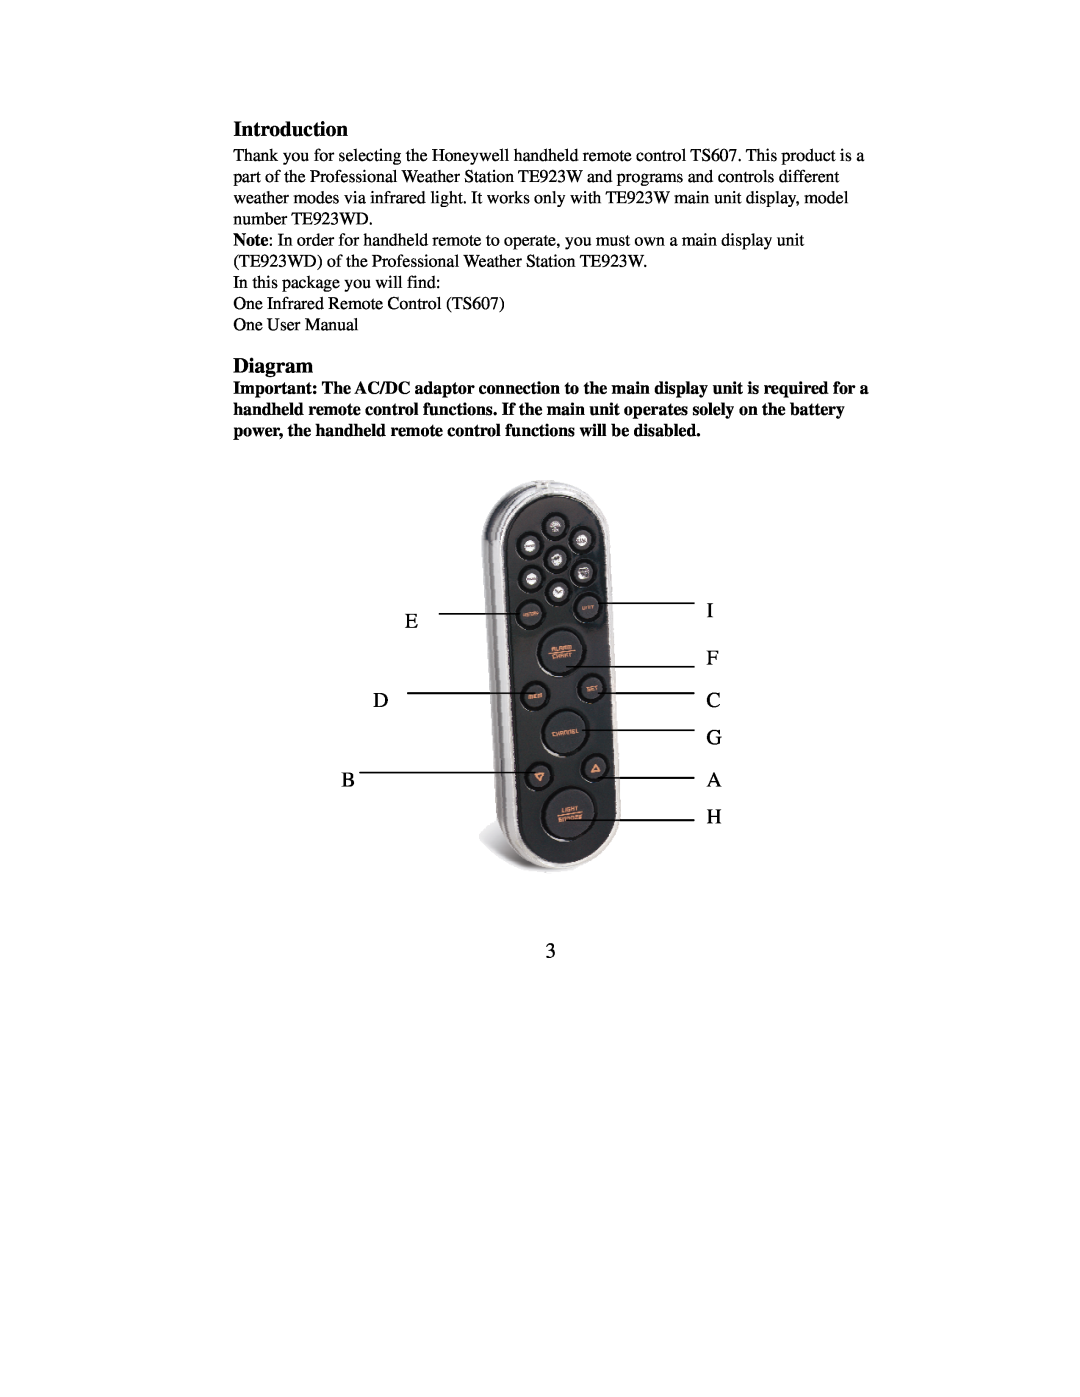 Honeywell TS607 user manual Diagram, Introduction, E F Dc G B A H 